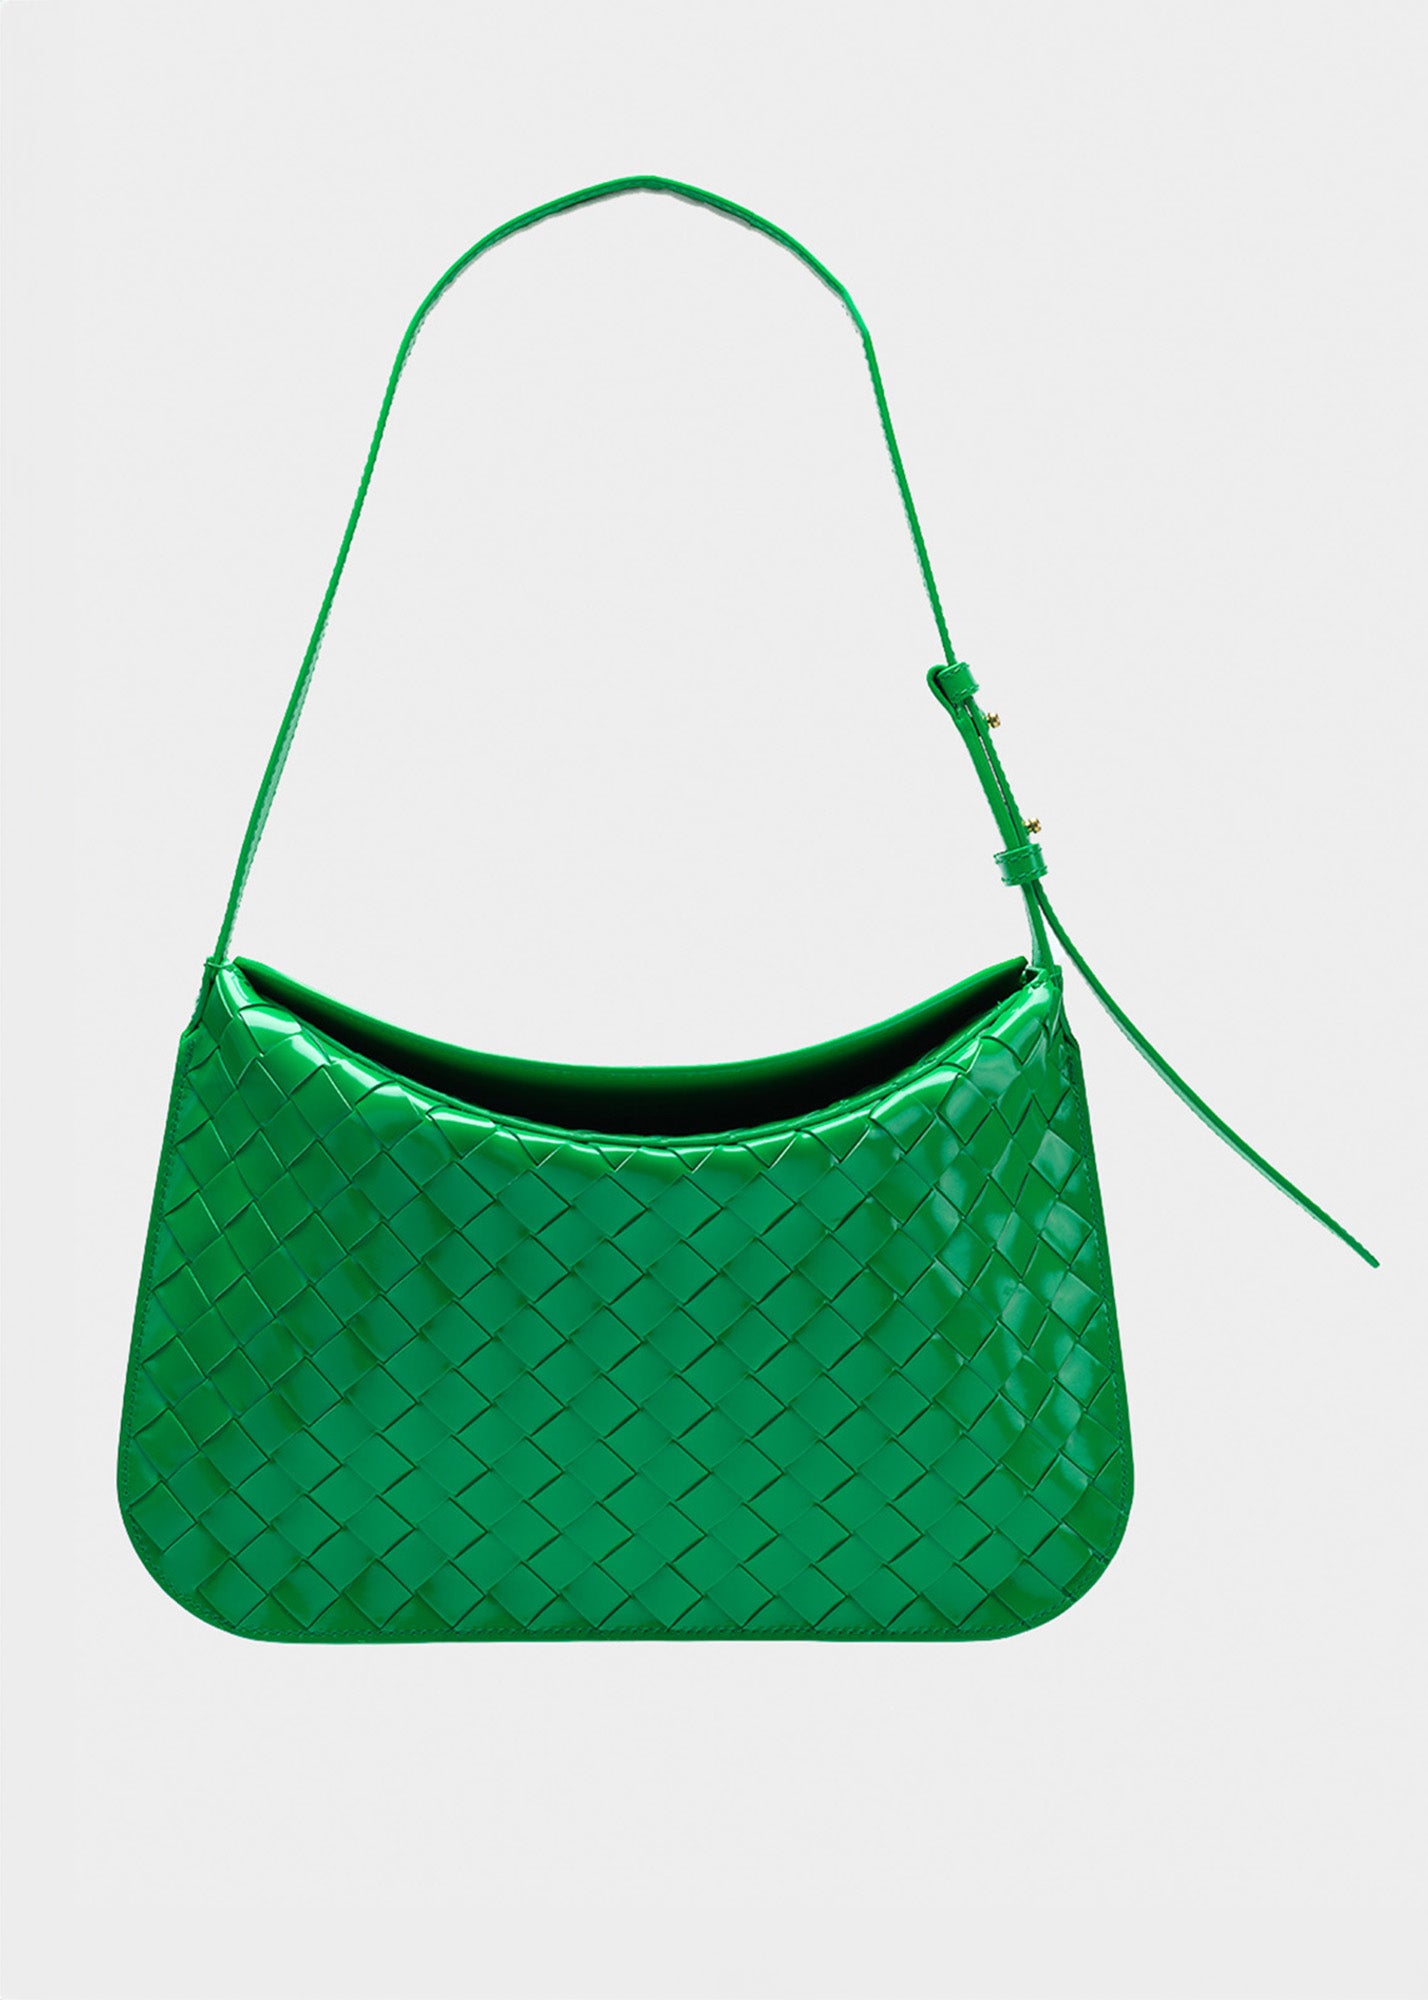 Bottega Veneta Green Flap Bag